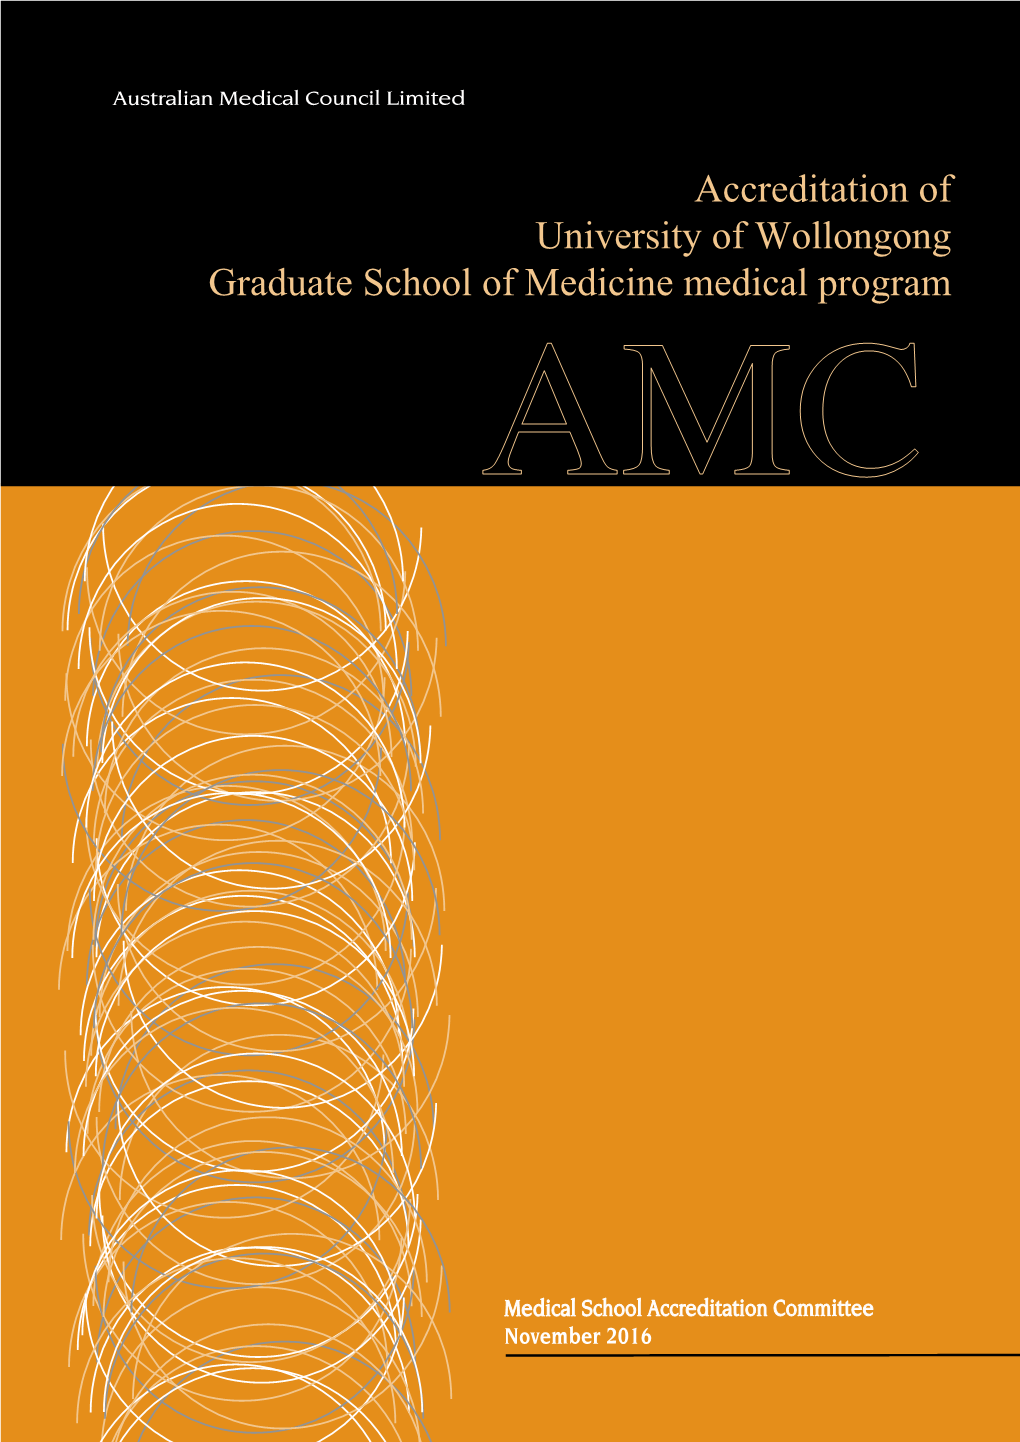 Accreditation of University of Wollongong Graduate School of Medicine Medical Program